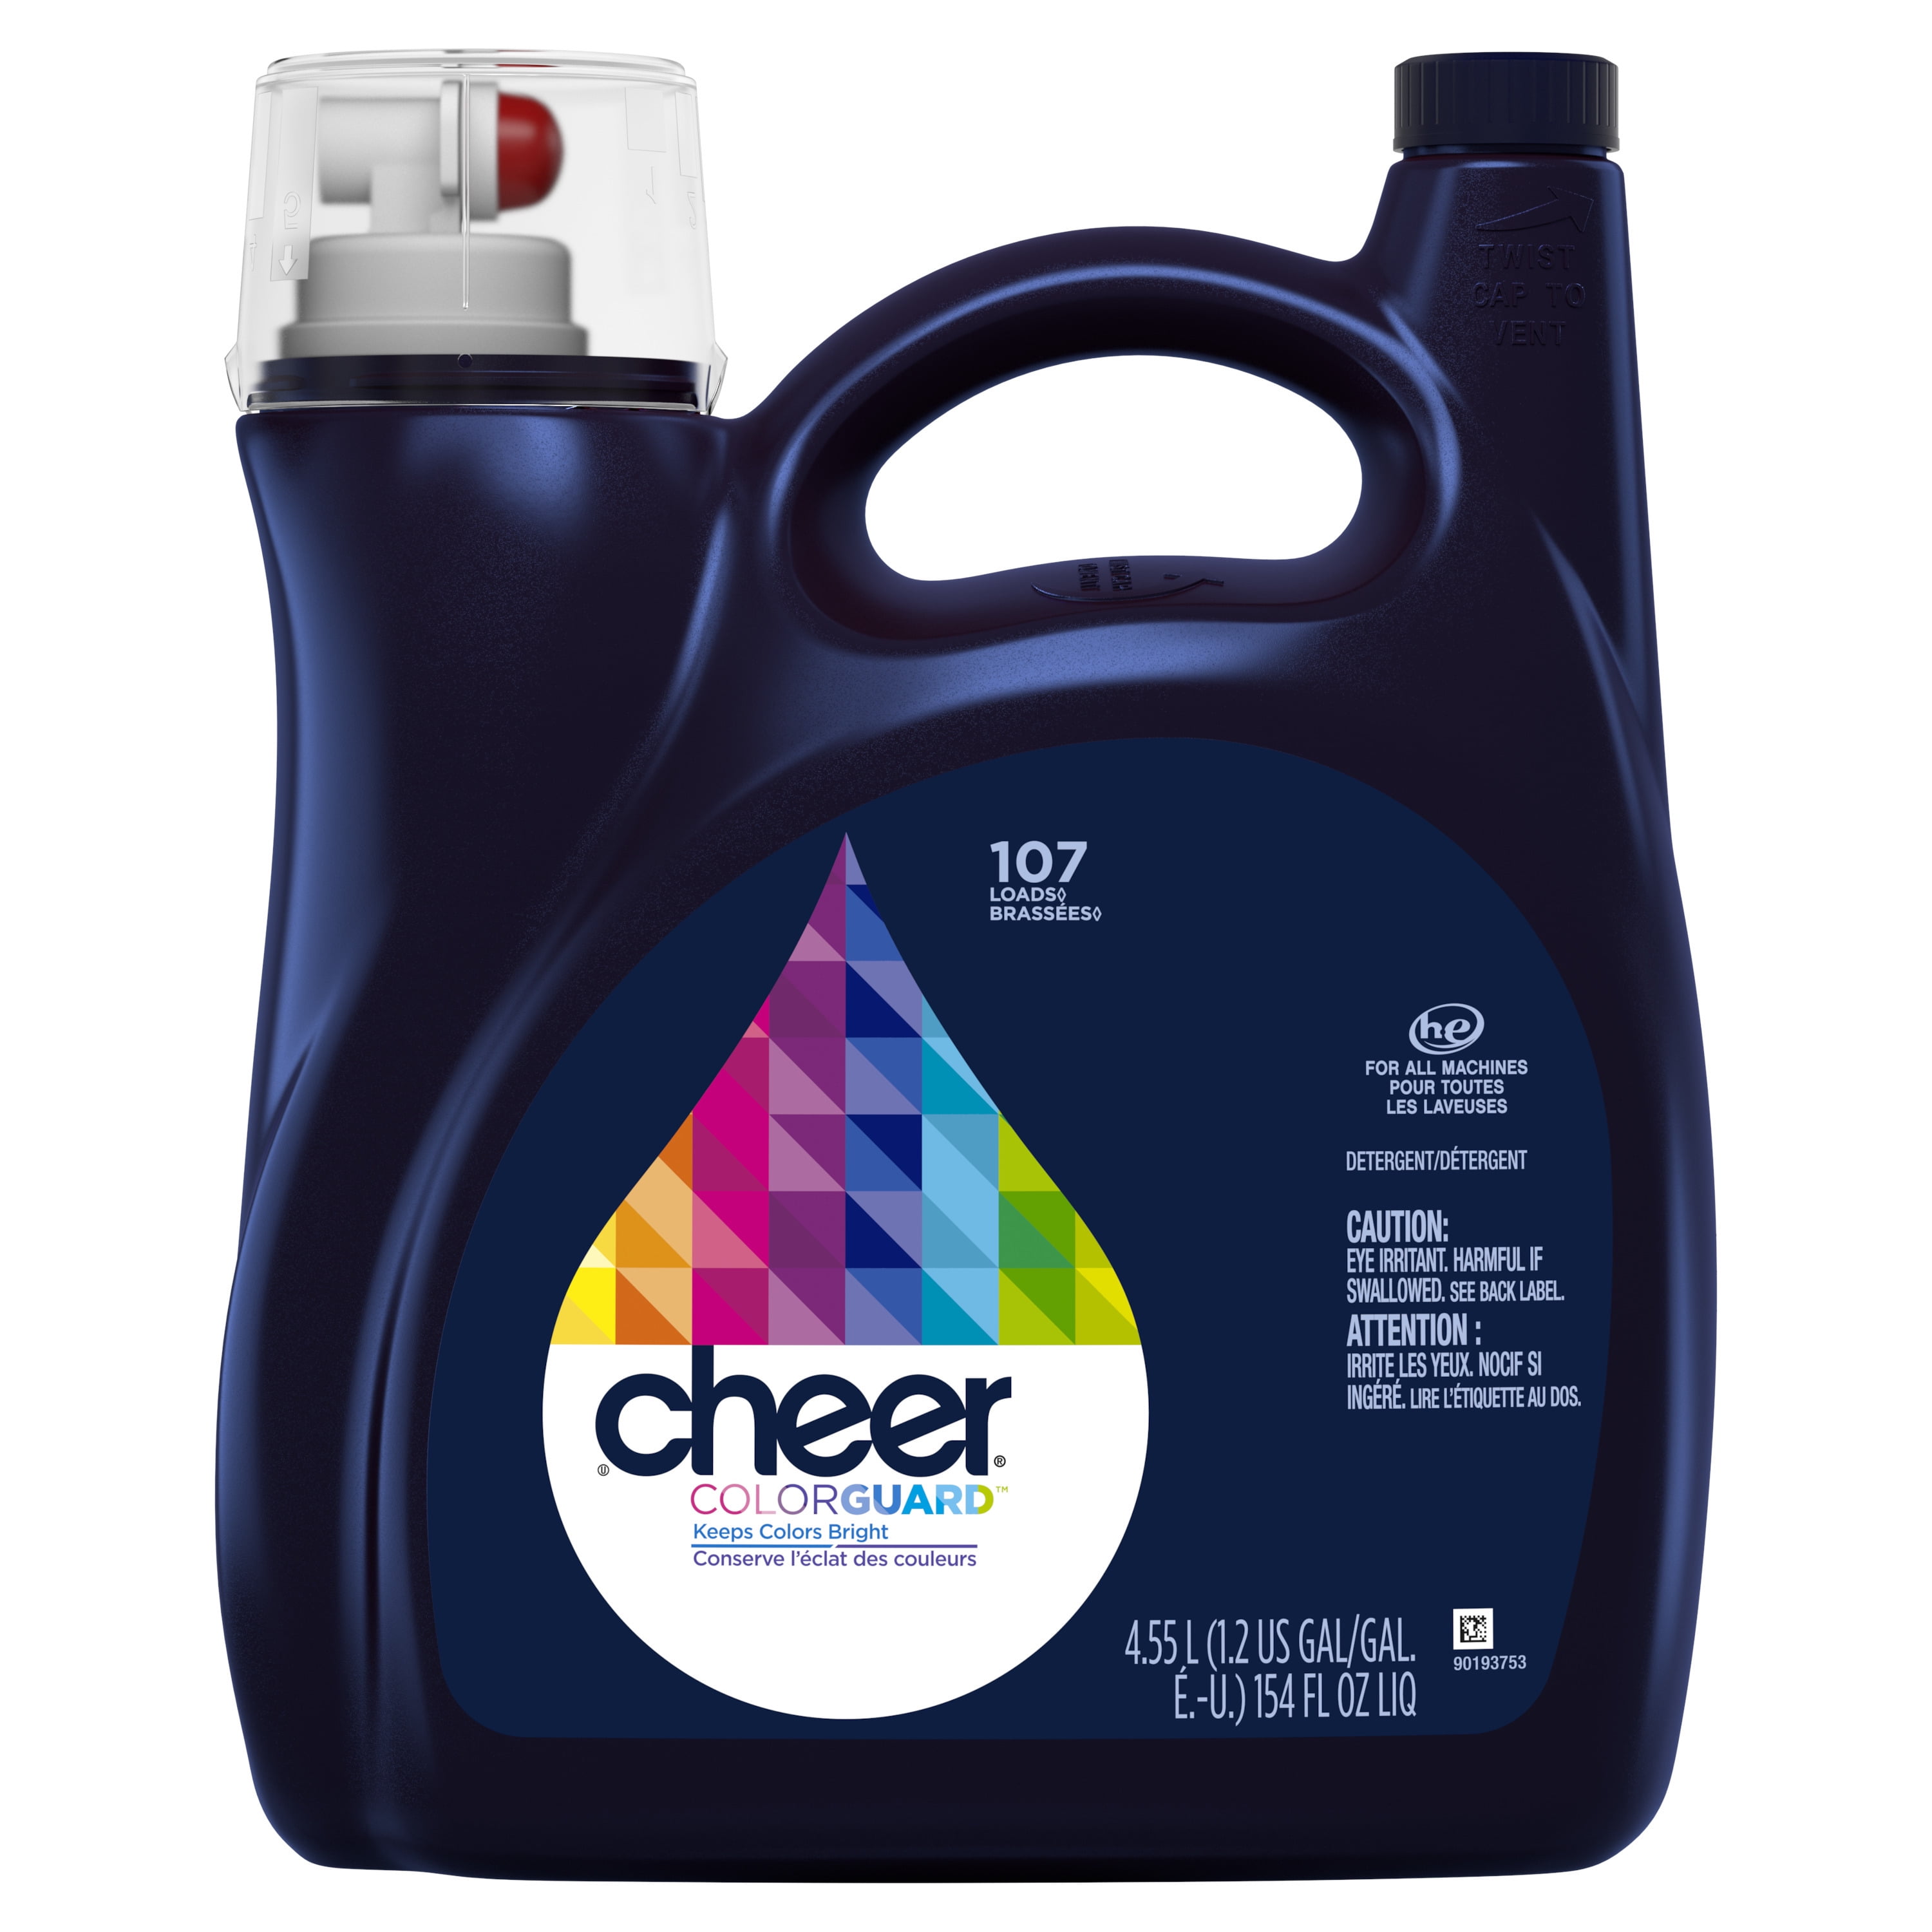 Cheer Liquid Laundry Detergent 107 Loads, 154 fl oz, He Compatible